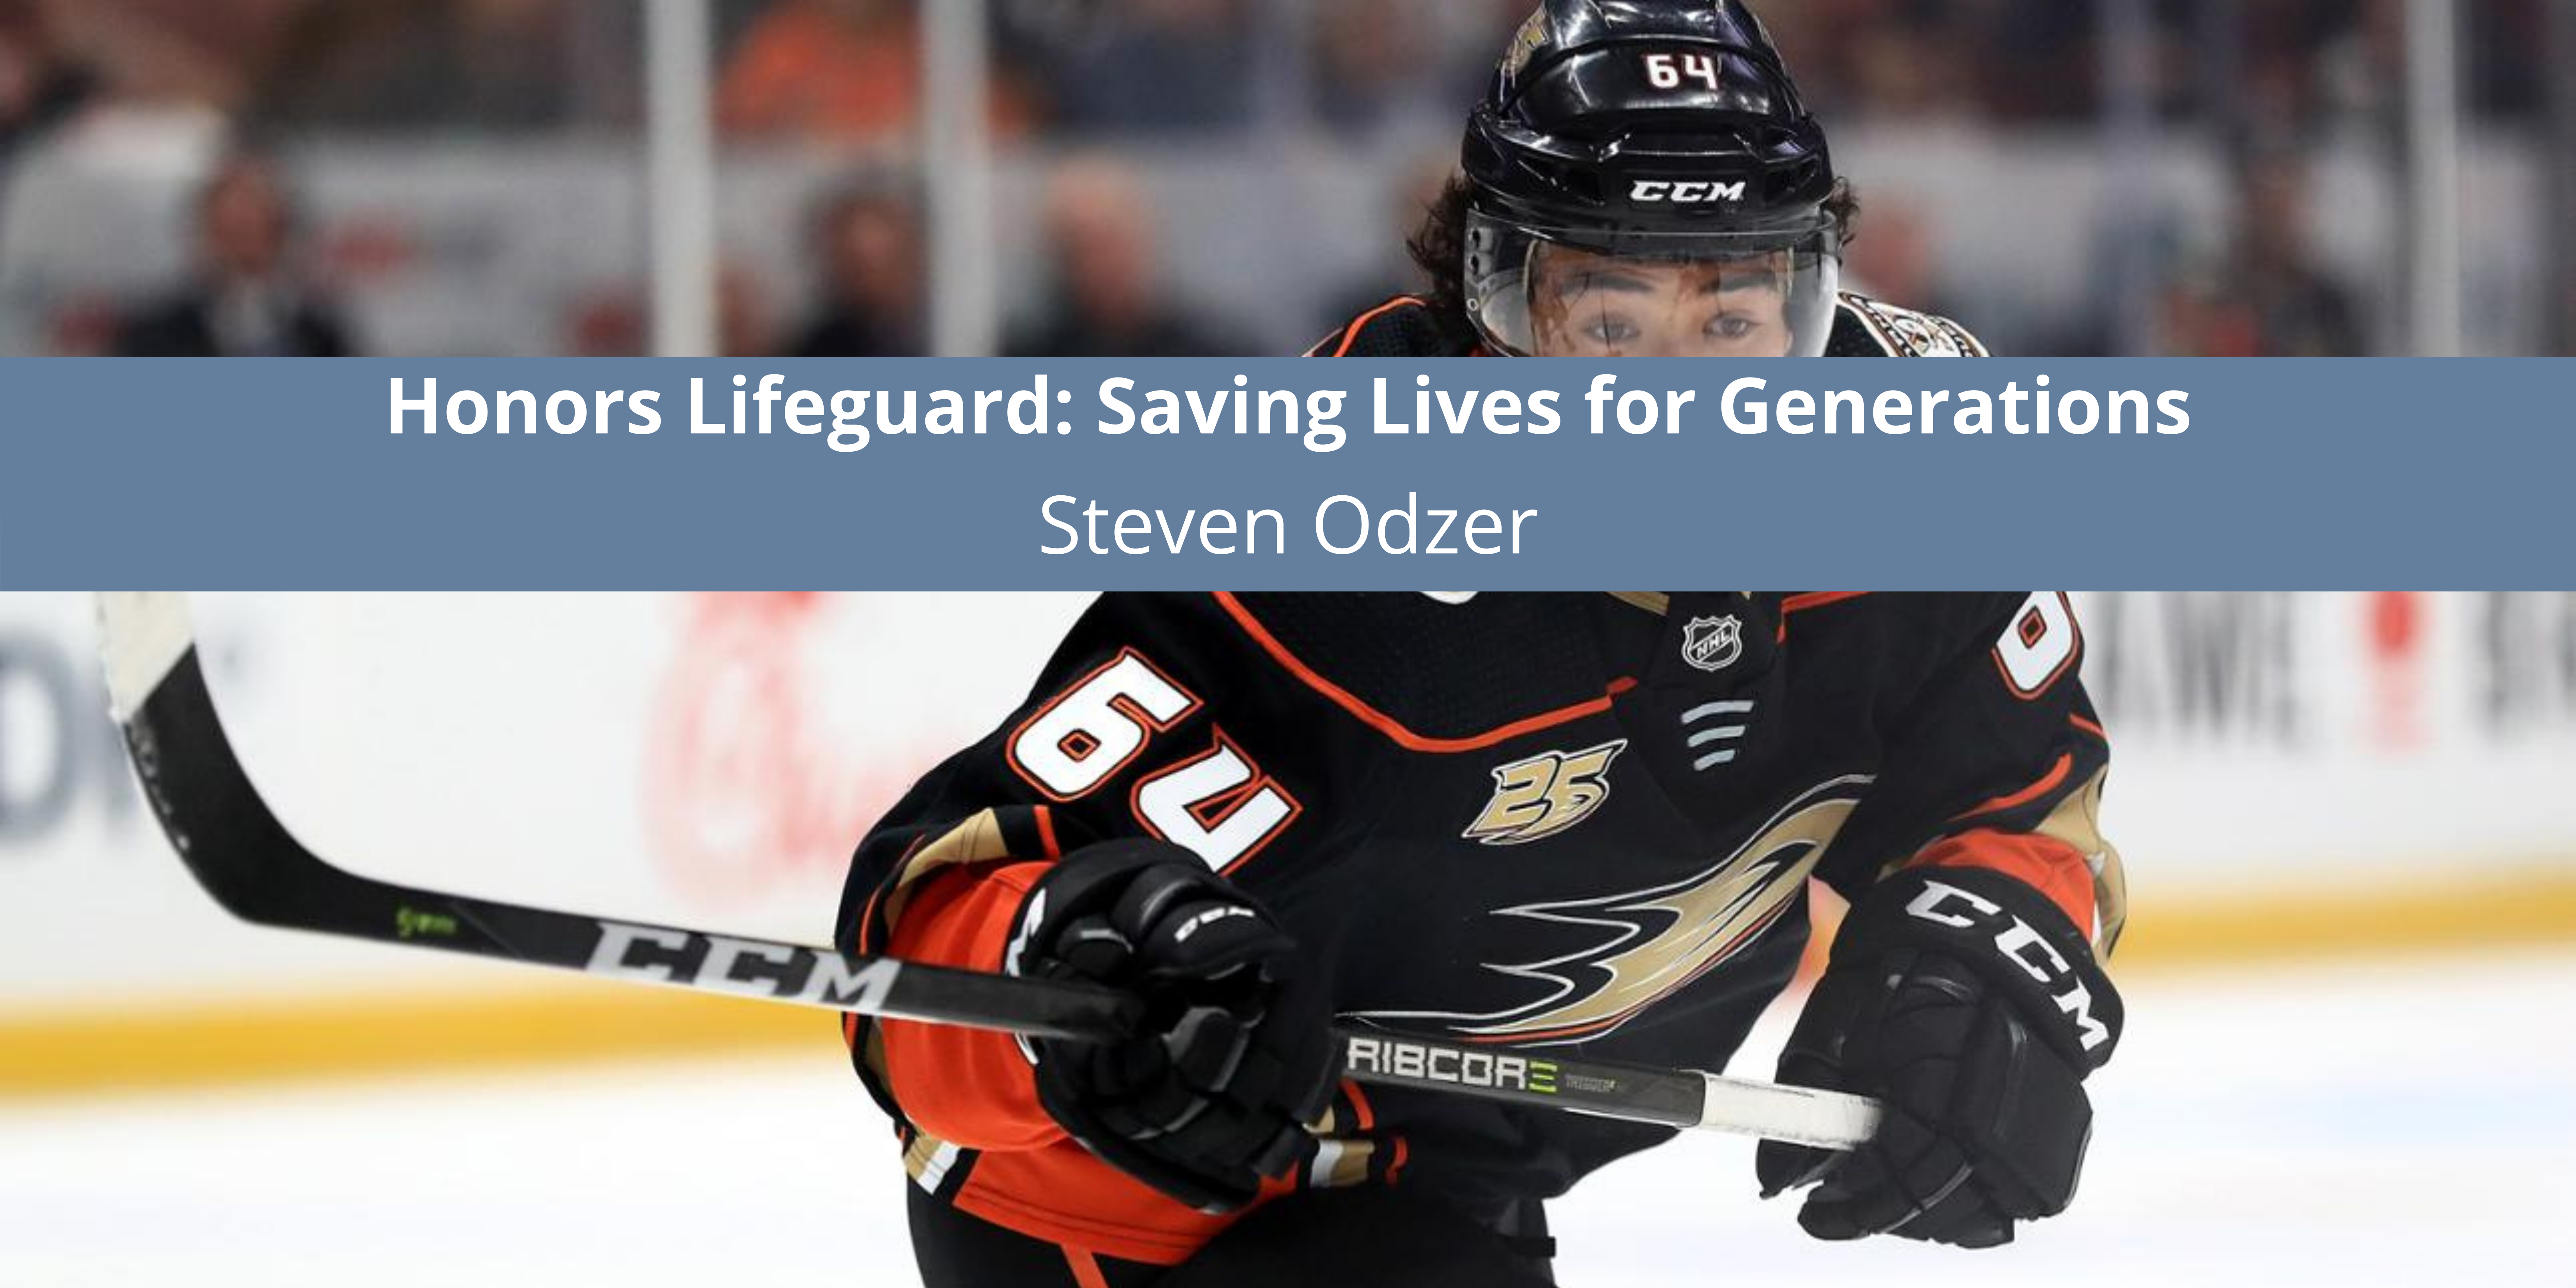 Honors Lifeguard: Saving Lives for Generations